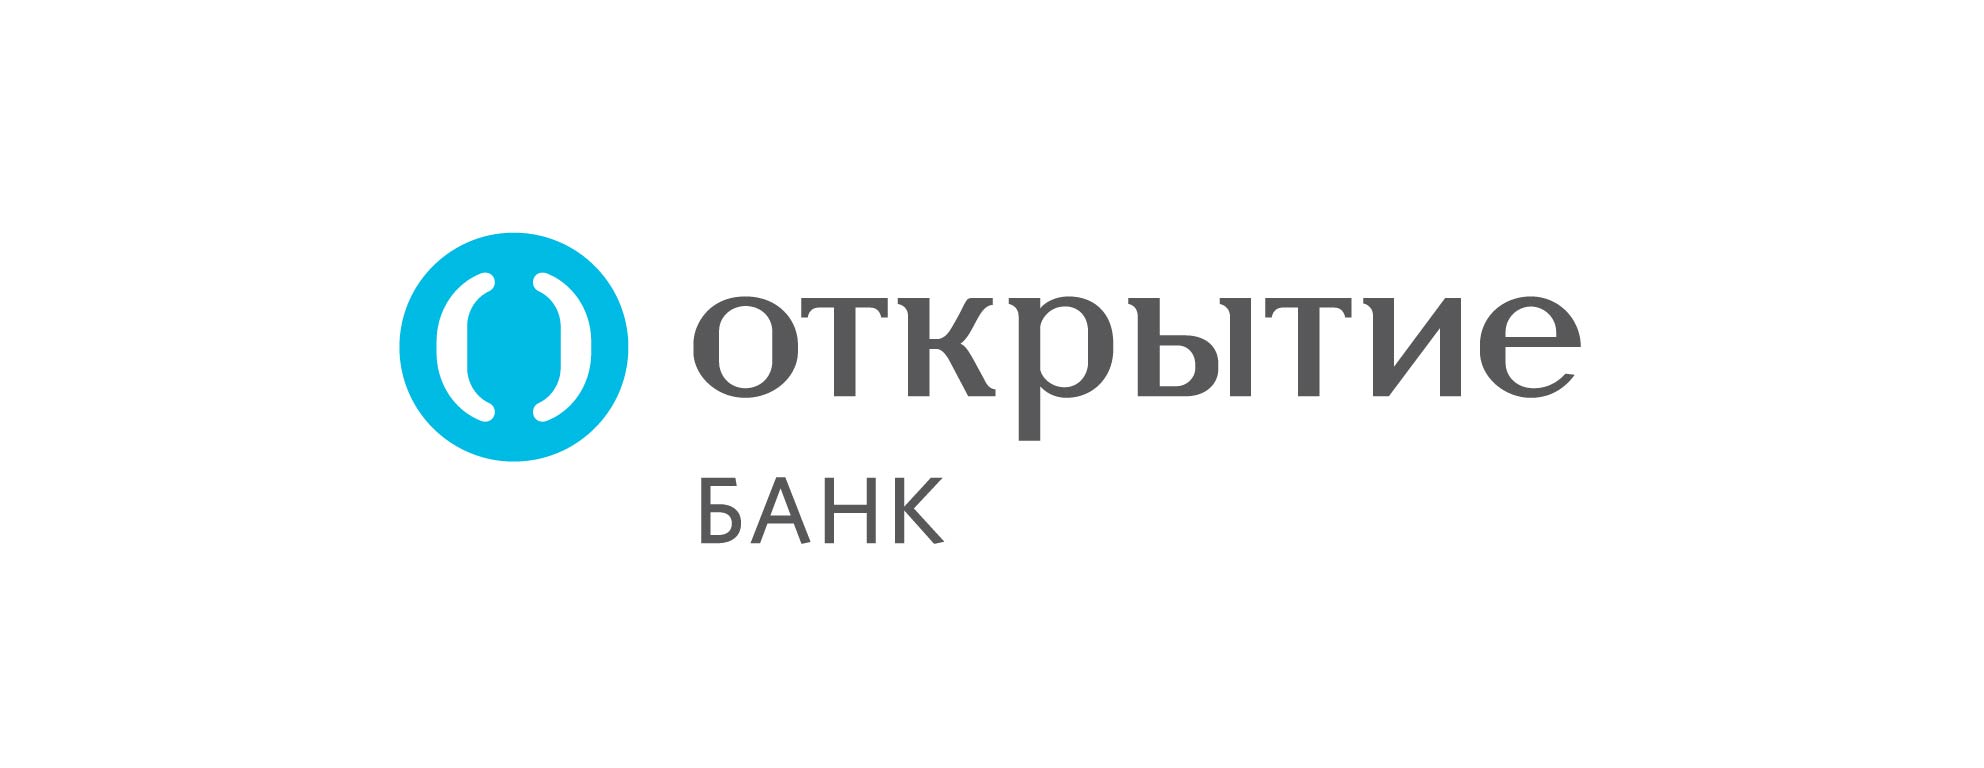 open_bank_rus_v2017.jpg